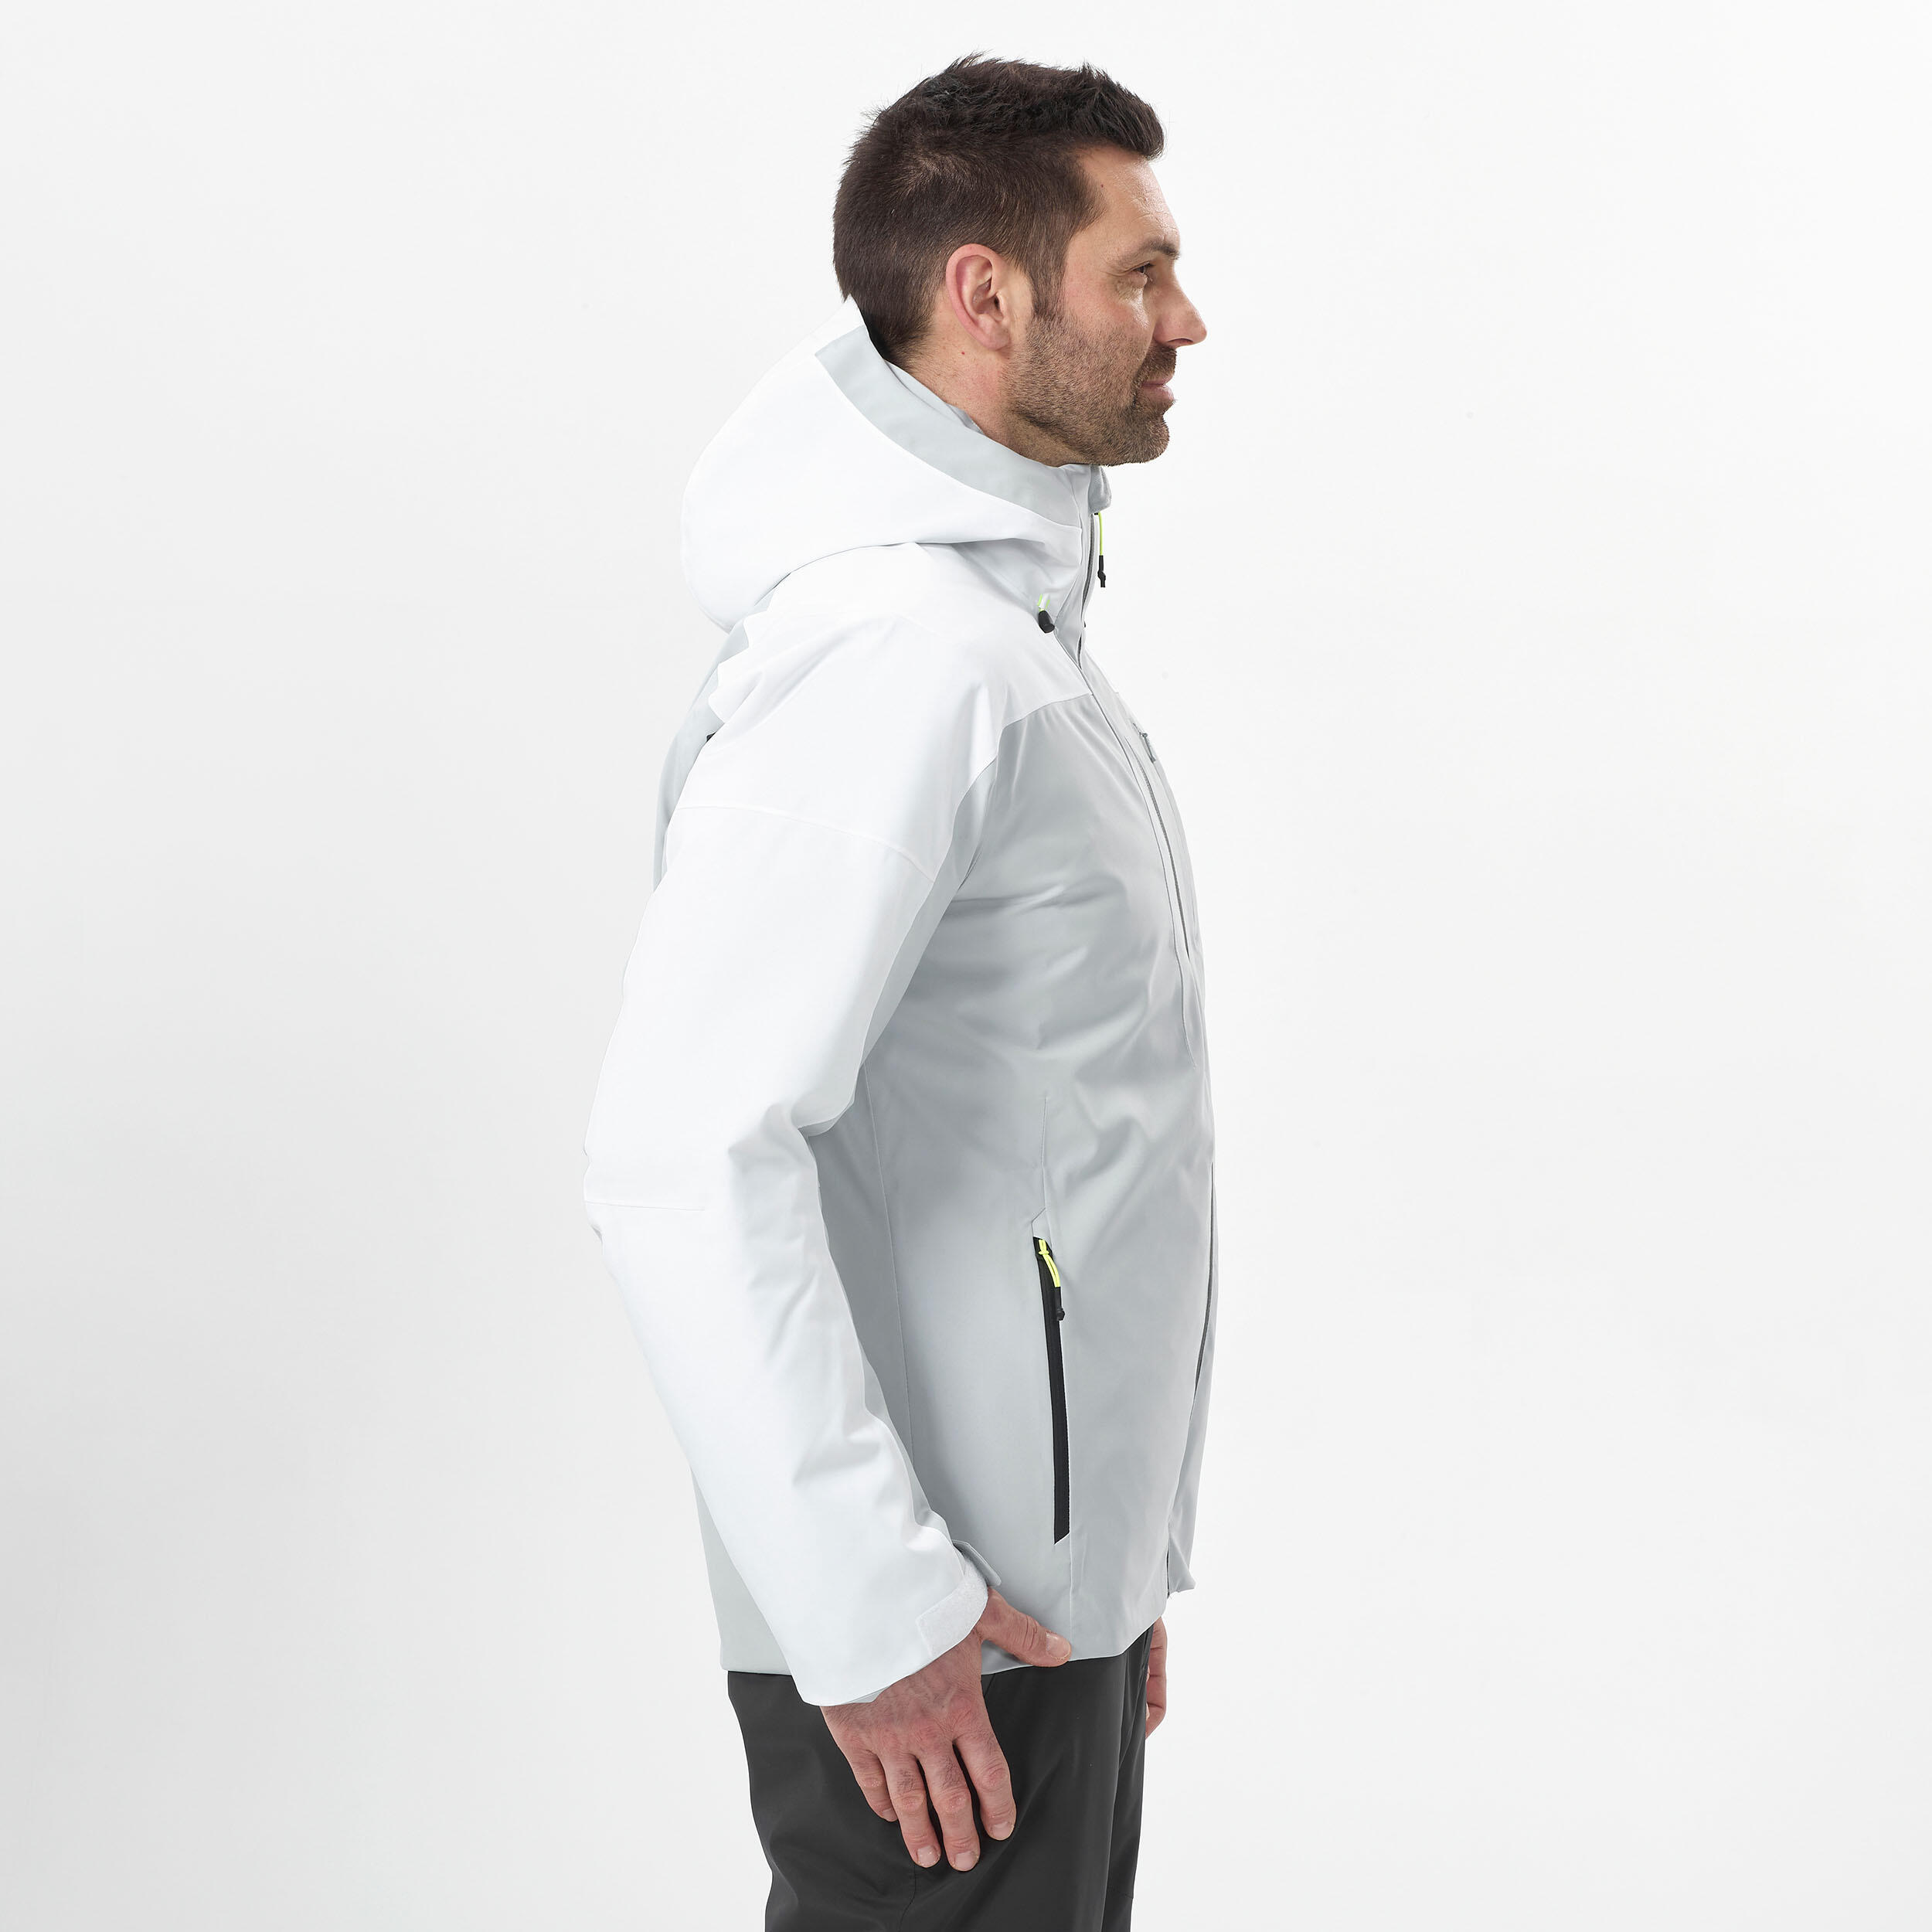 Men’s Warm Ski Jacket 500 - Grey/White 5/10